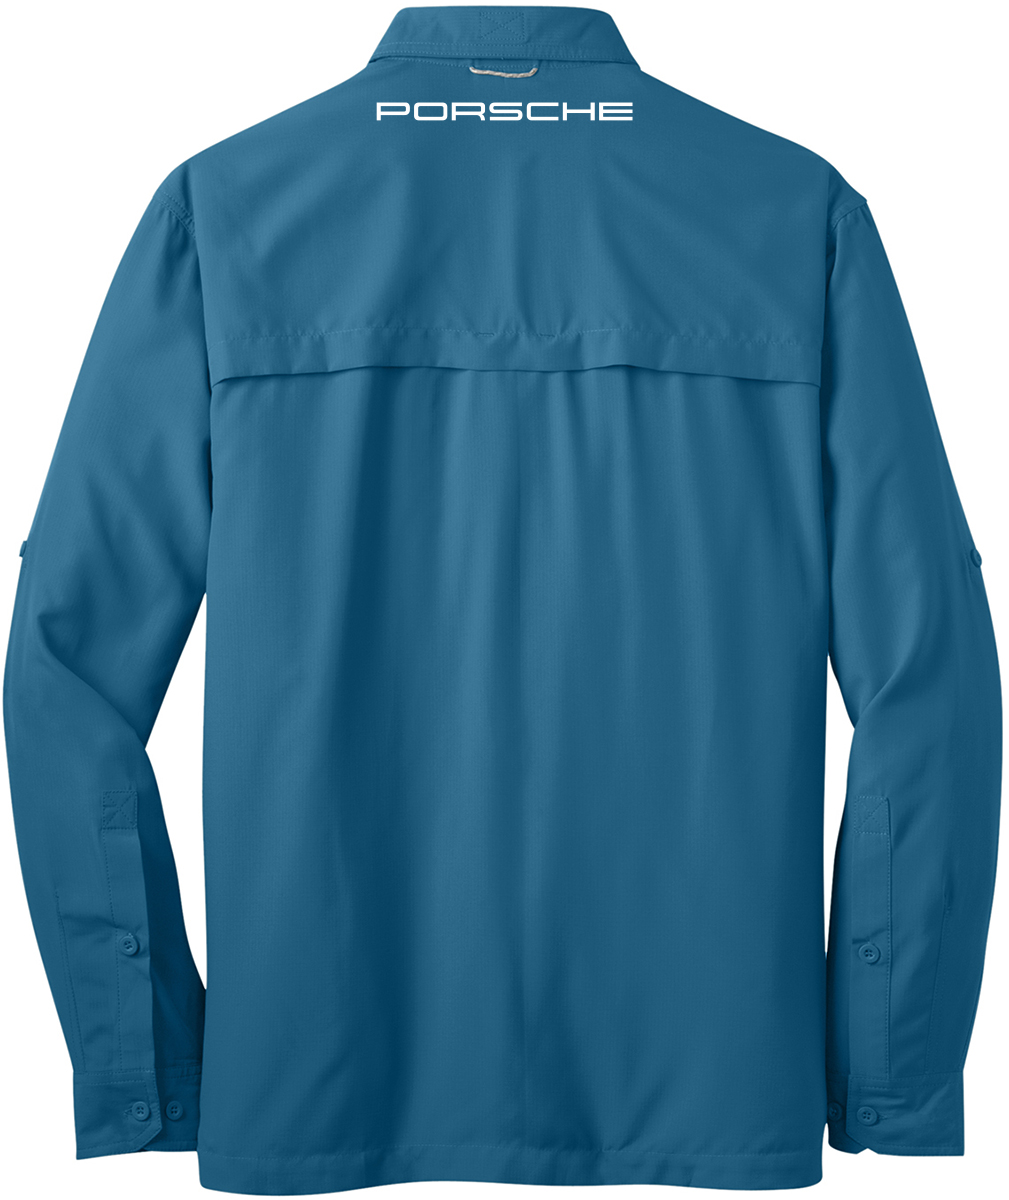 Eddie Bauer - Long Sleeve Performance Fishing Shirt